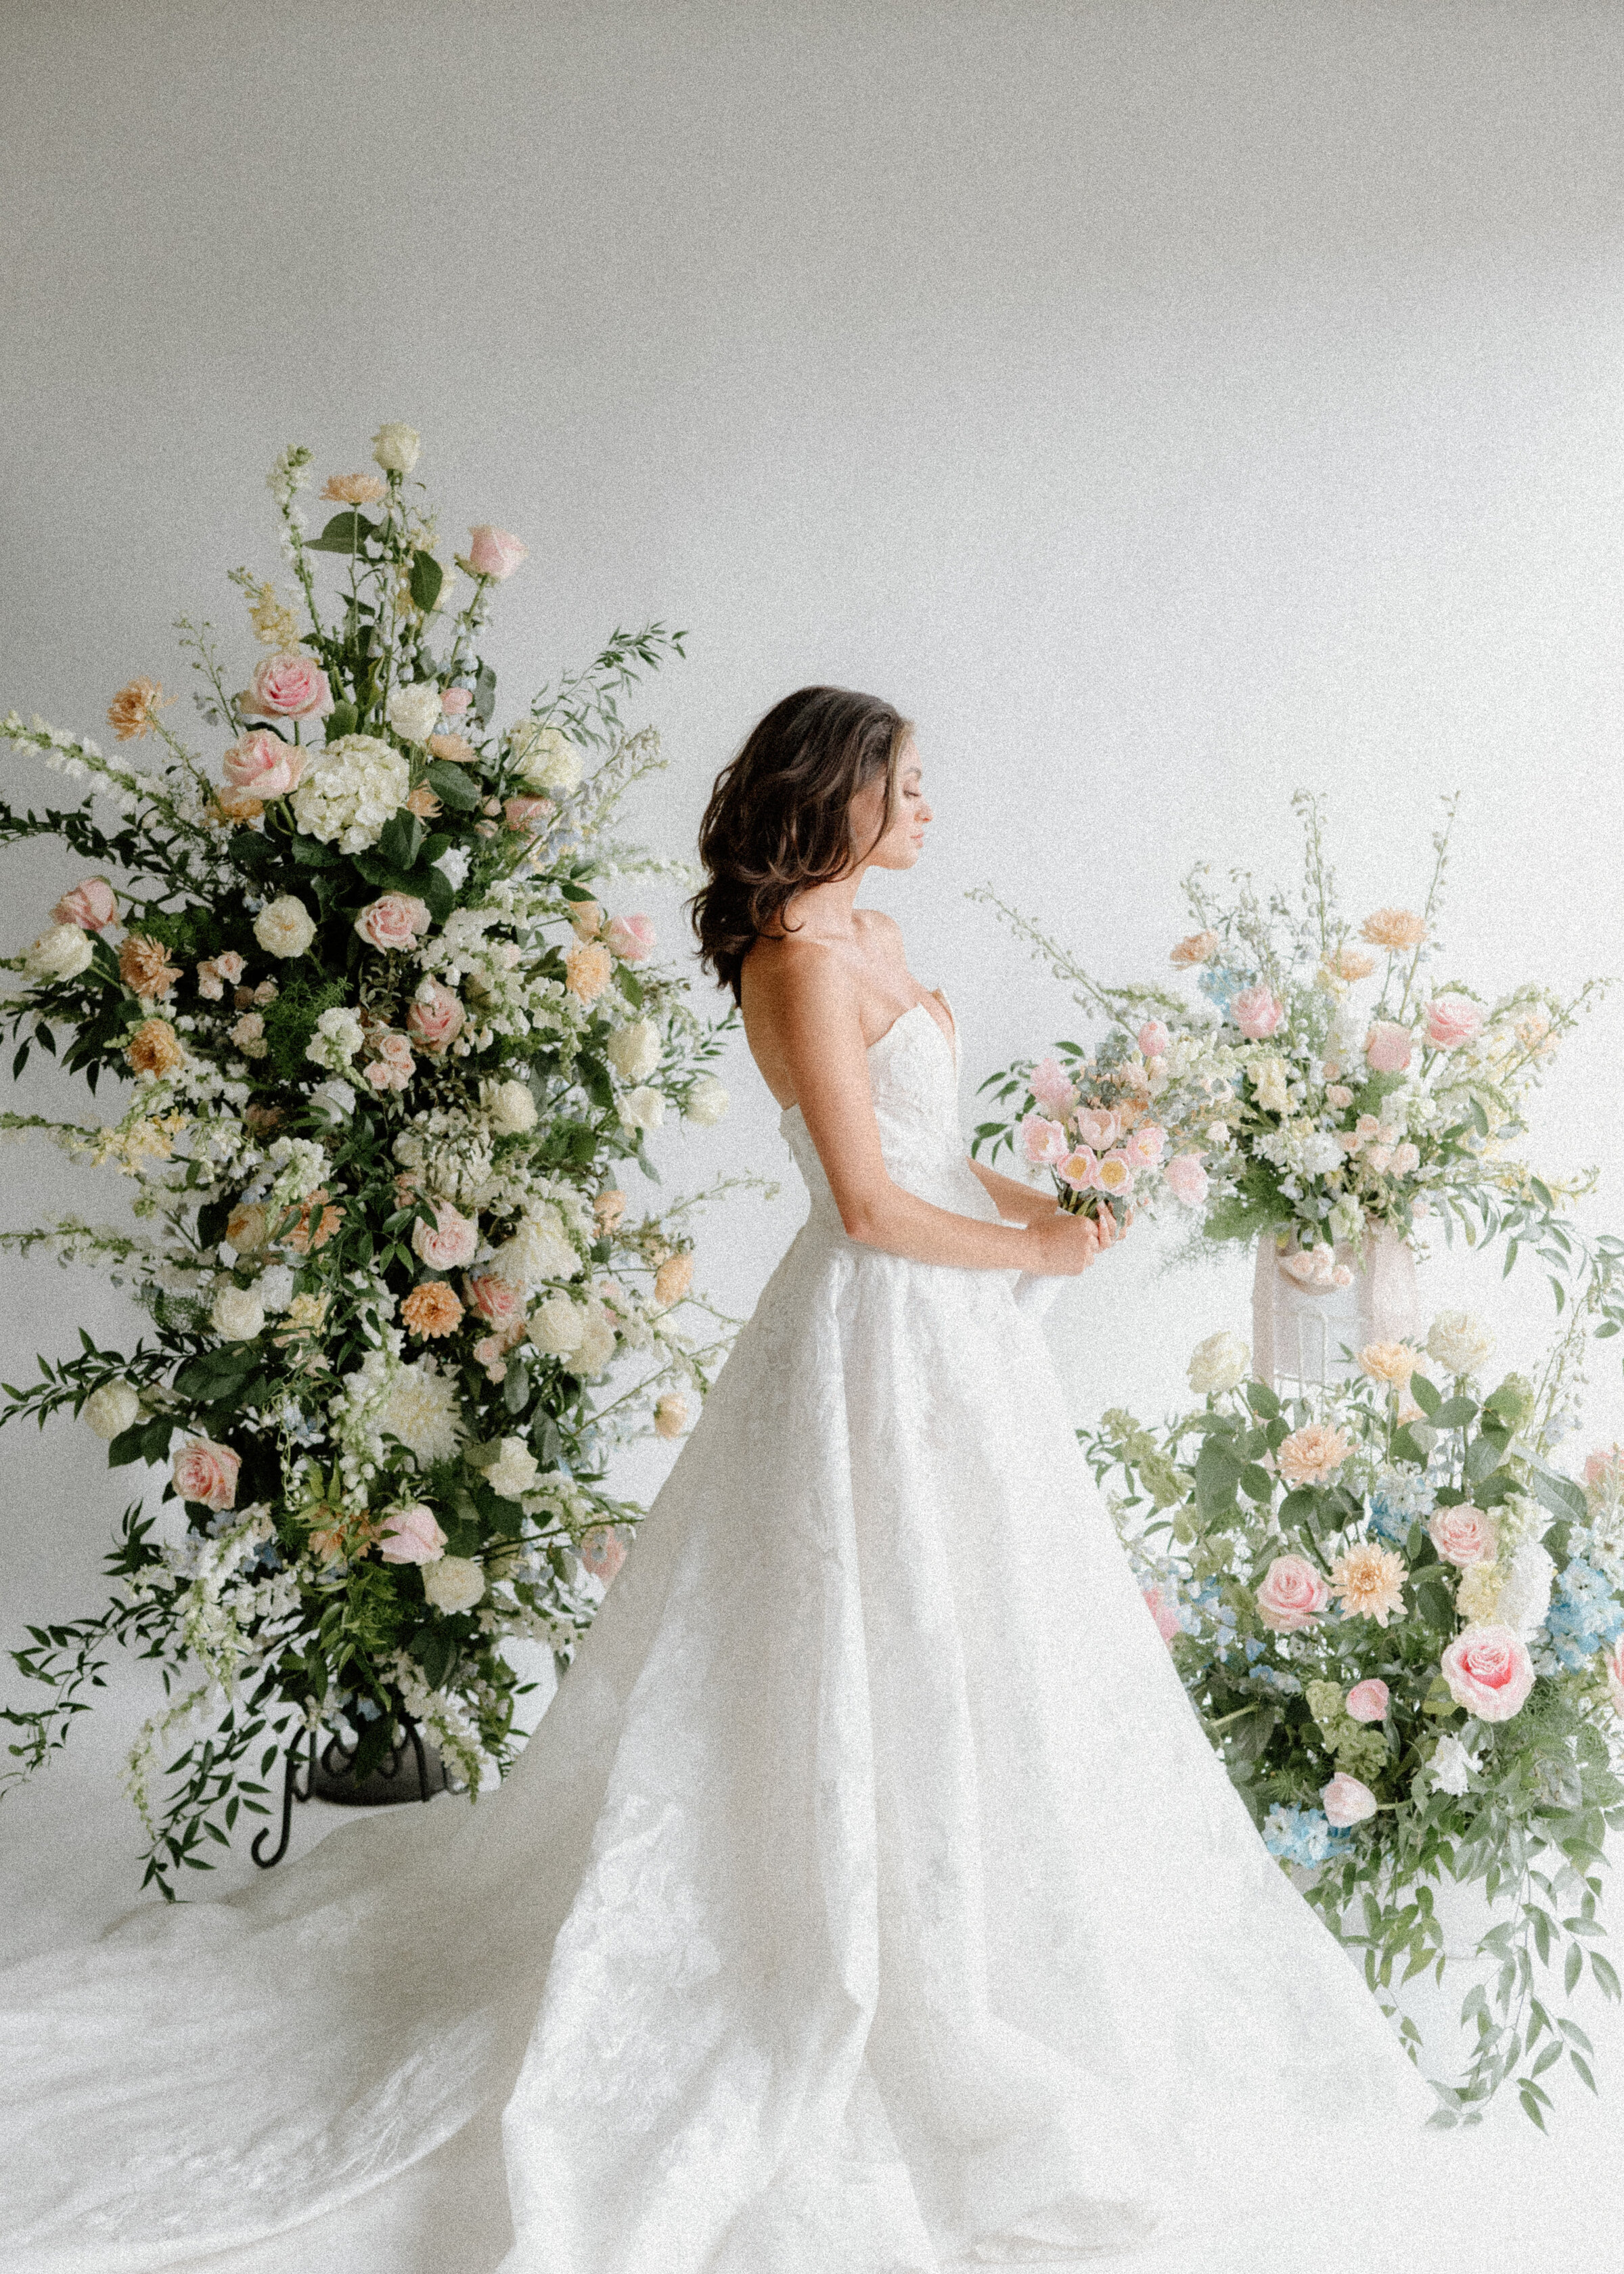 Bride posing in front of floral installation in studio